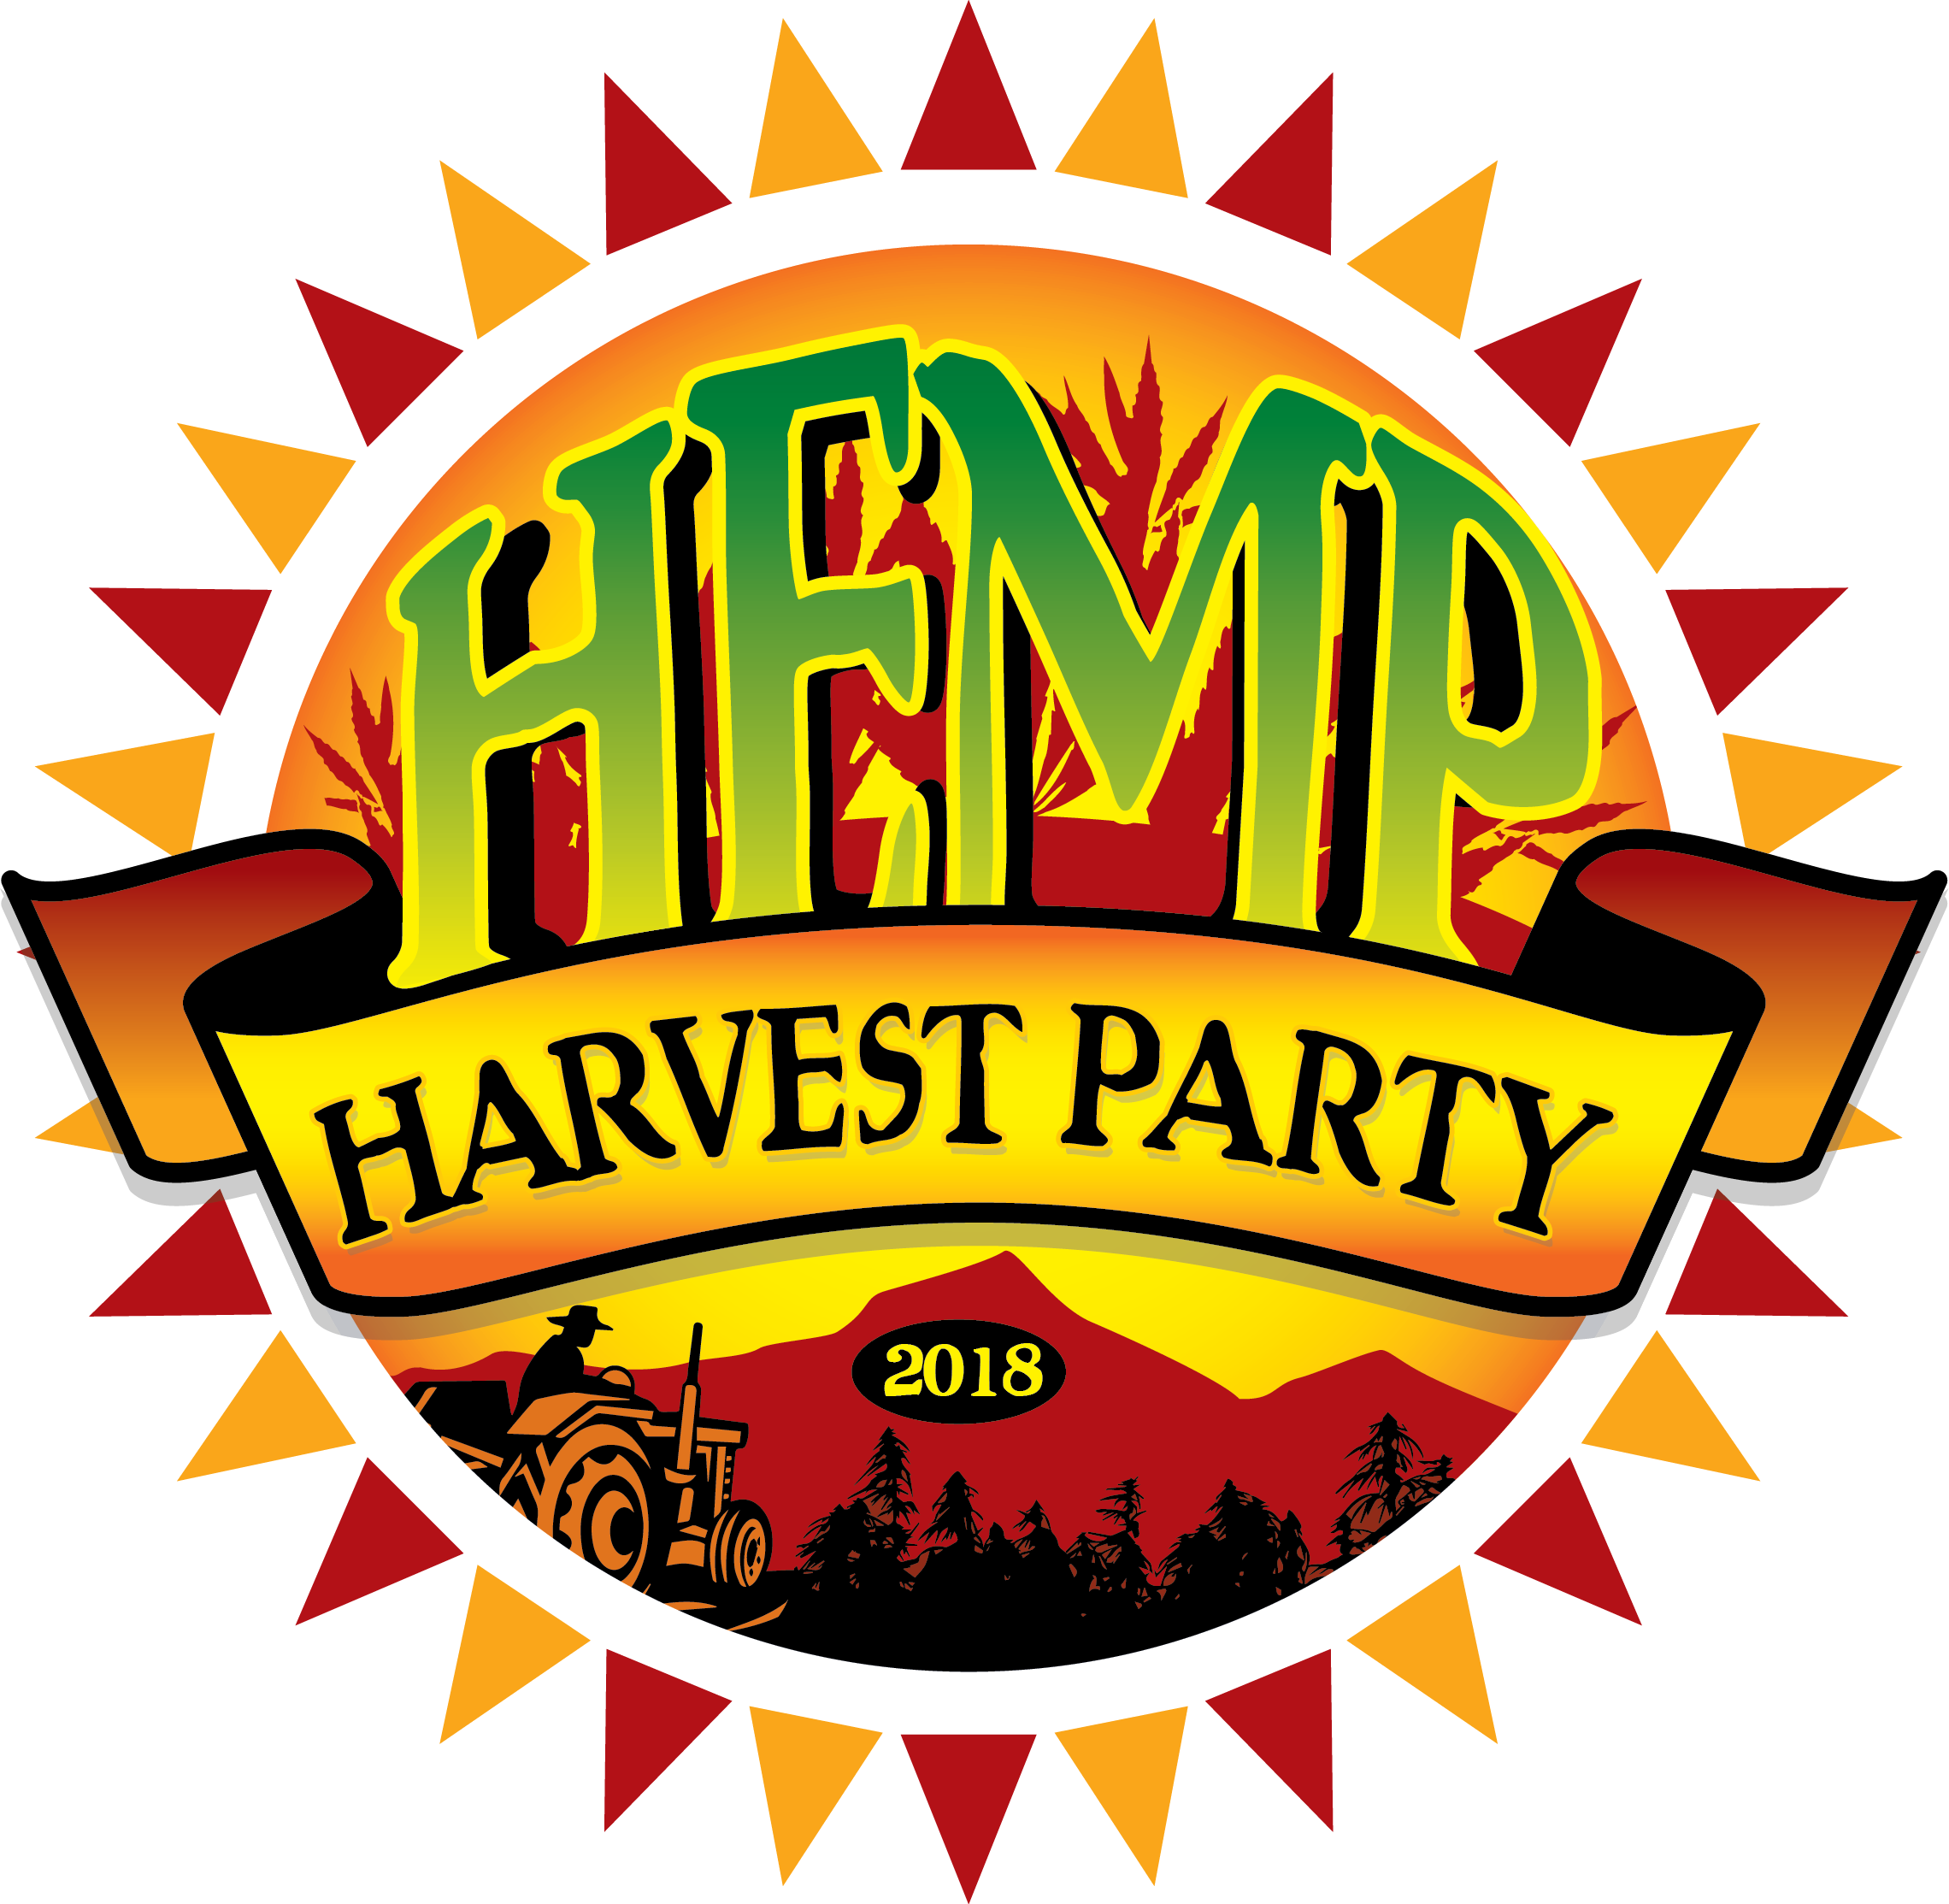 5th Annual Hemp Harvest Party - Hemp Harvest Party (2280x2227)